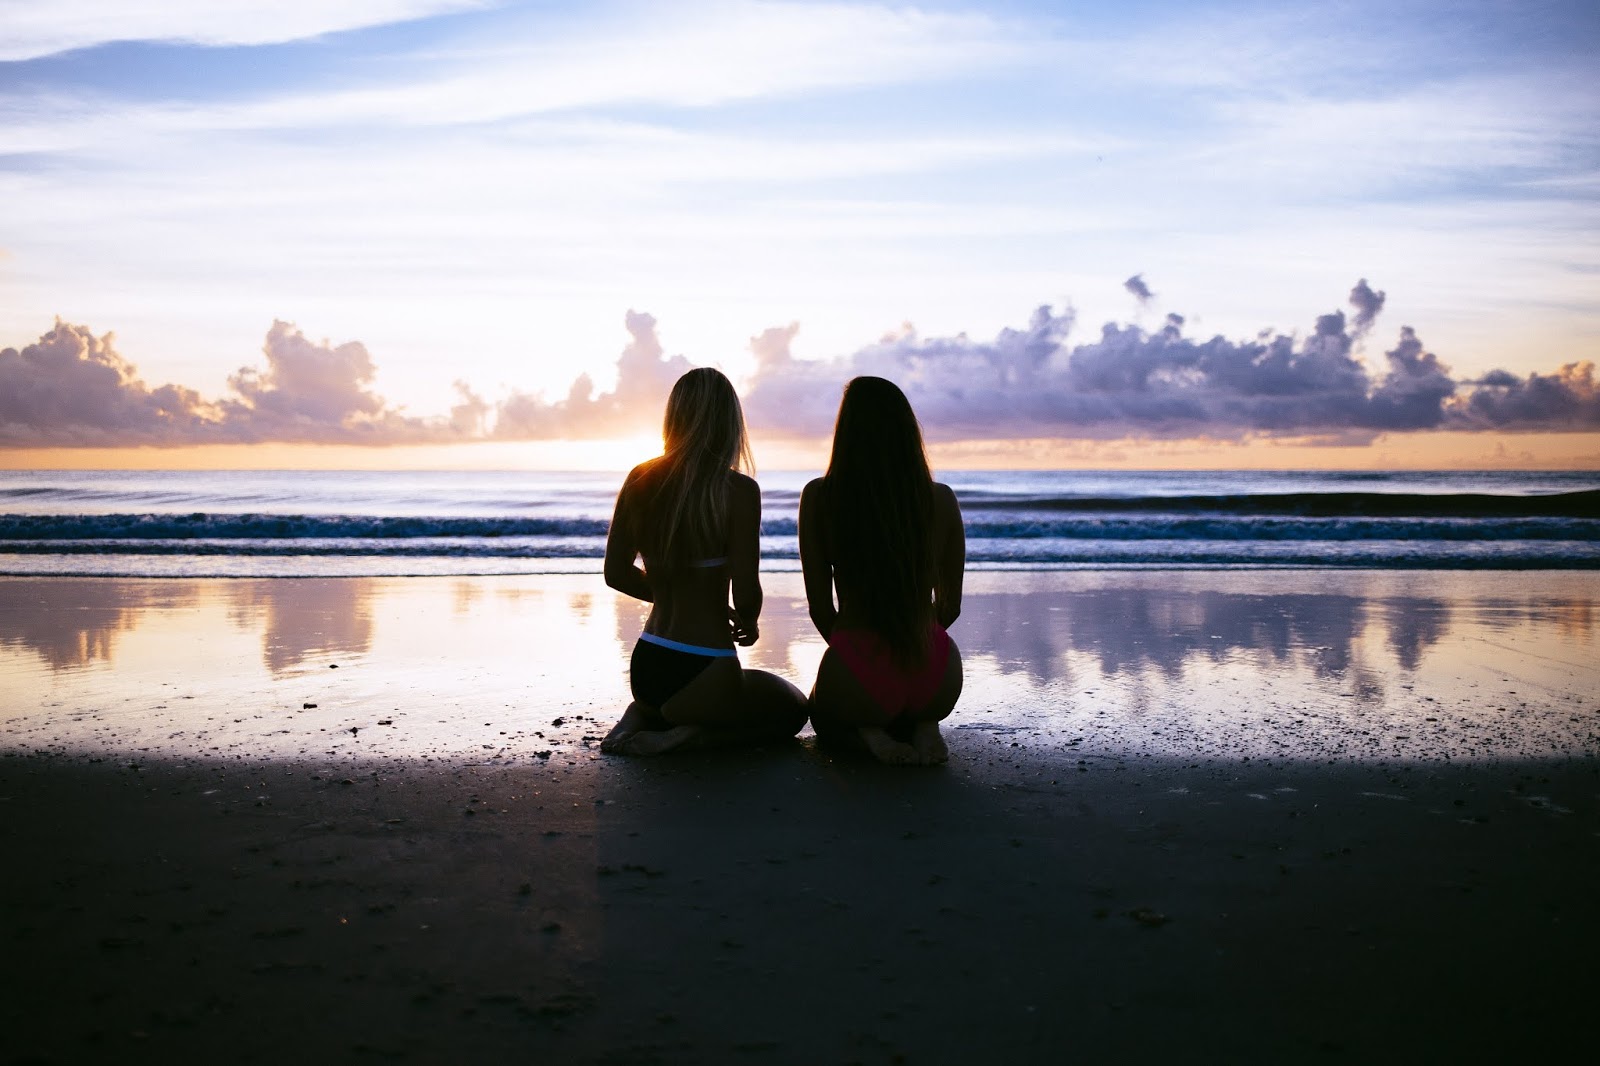 People 1600x1066 women long hair women outdoors women on beach bikini silhouette two women sunset beach sand